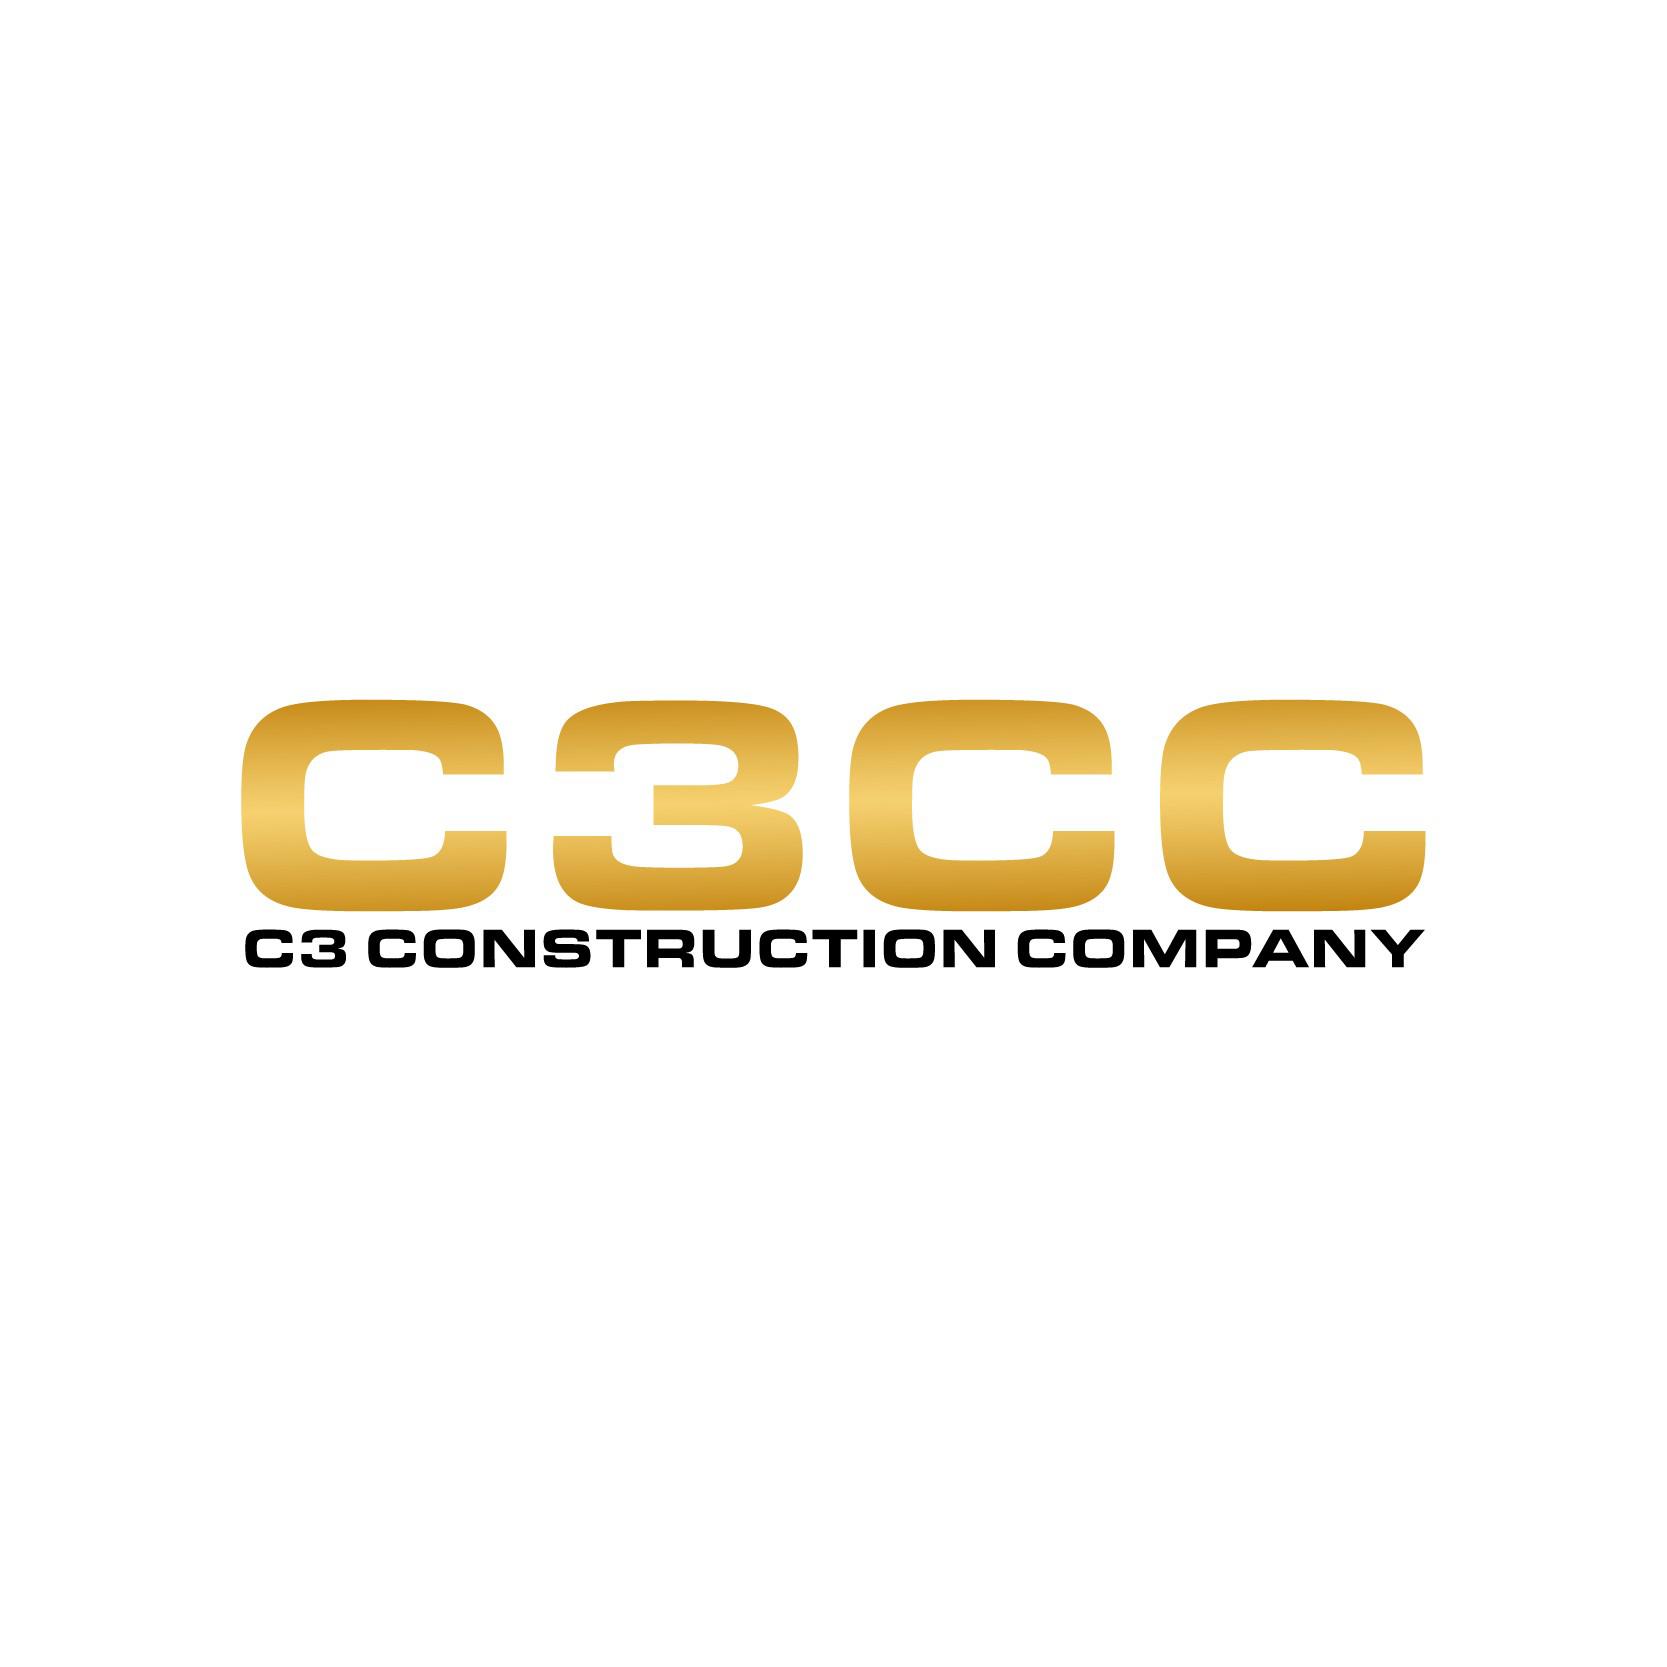 C3CC - C3 Construction Company